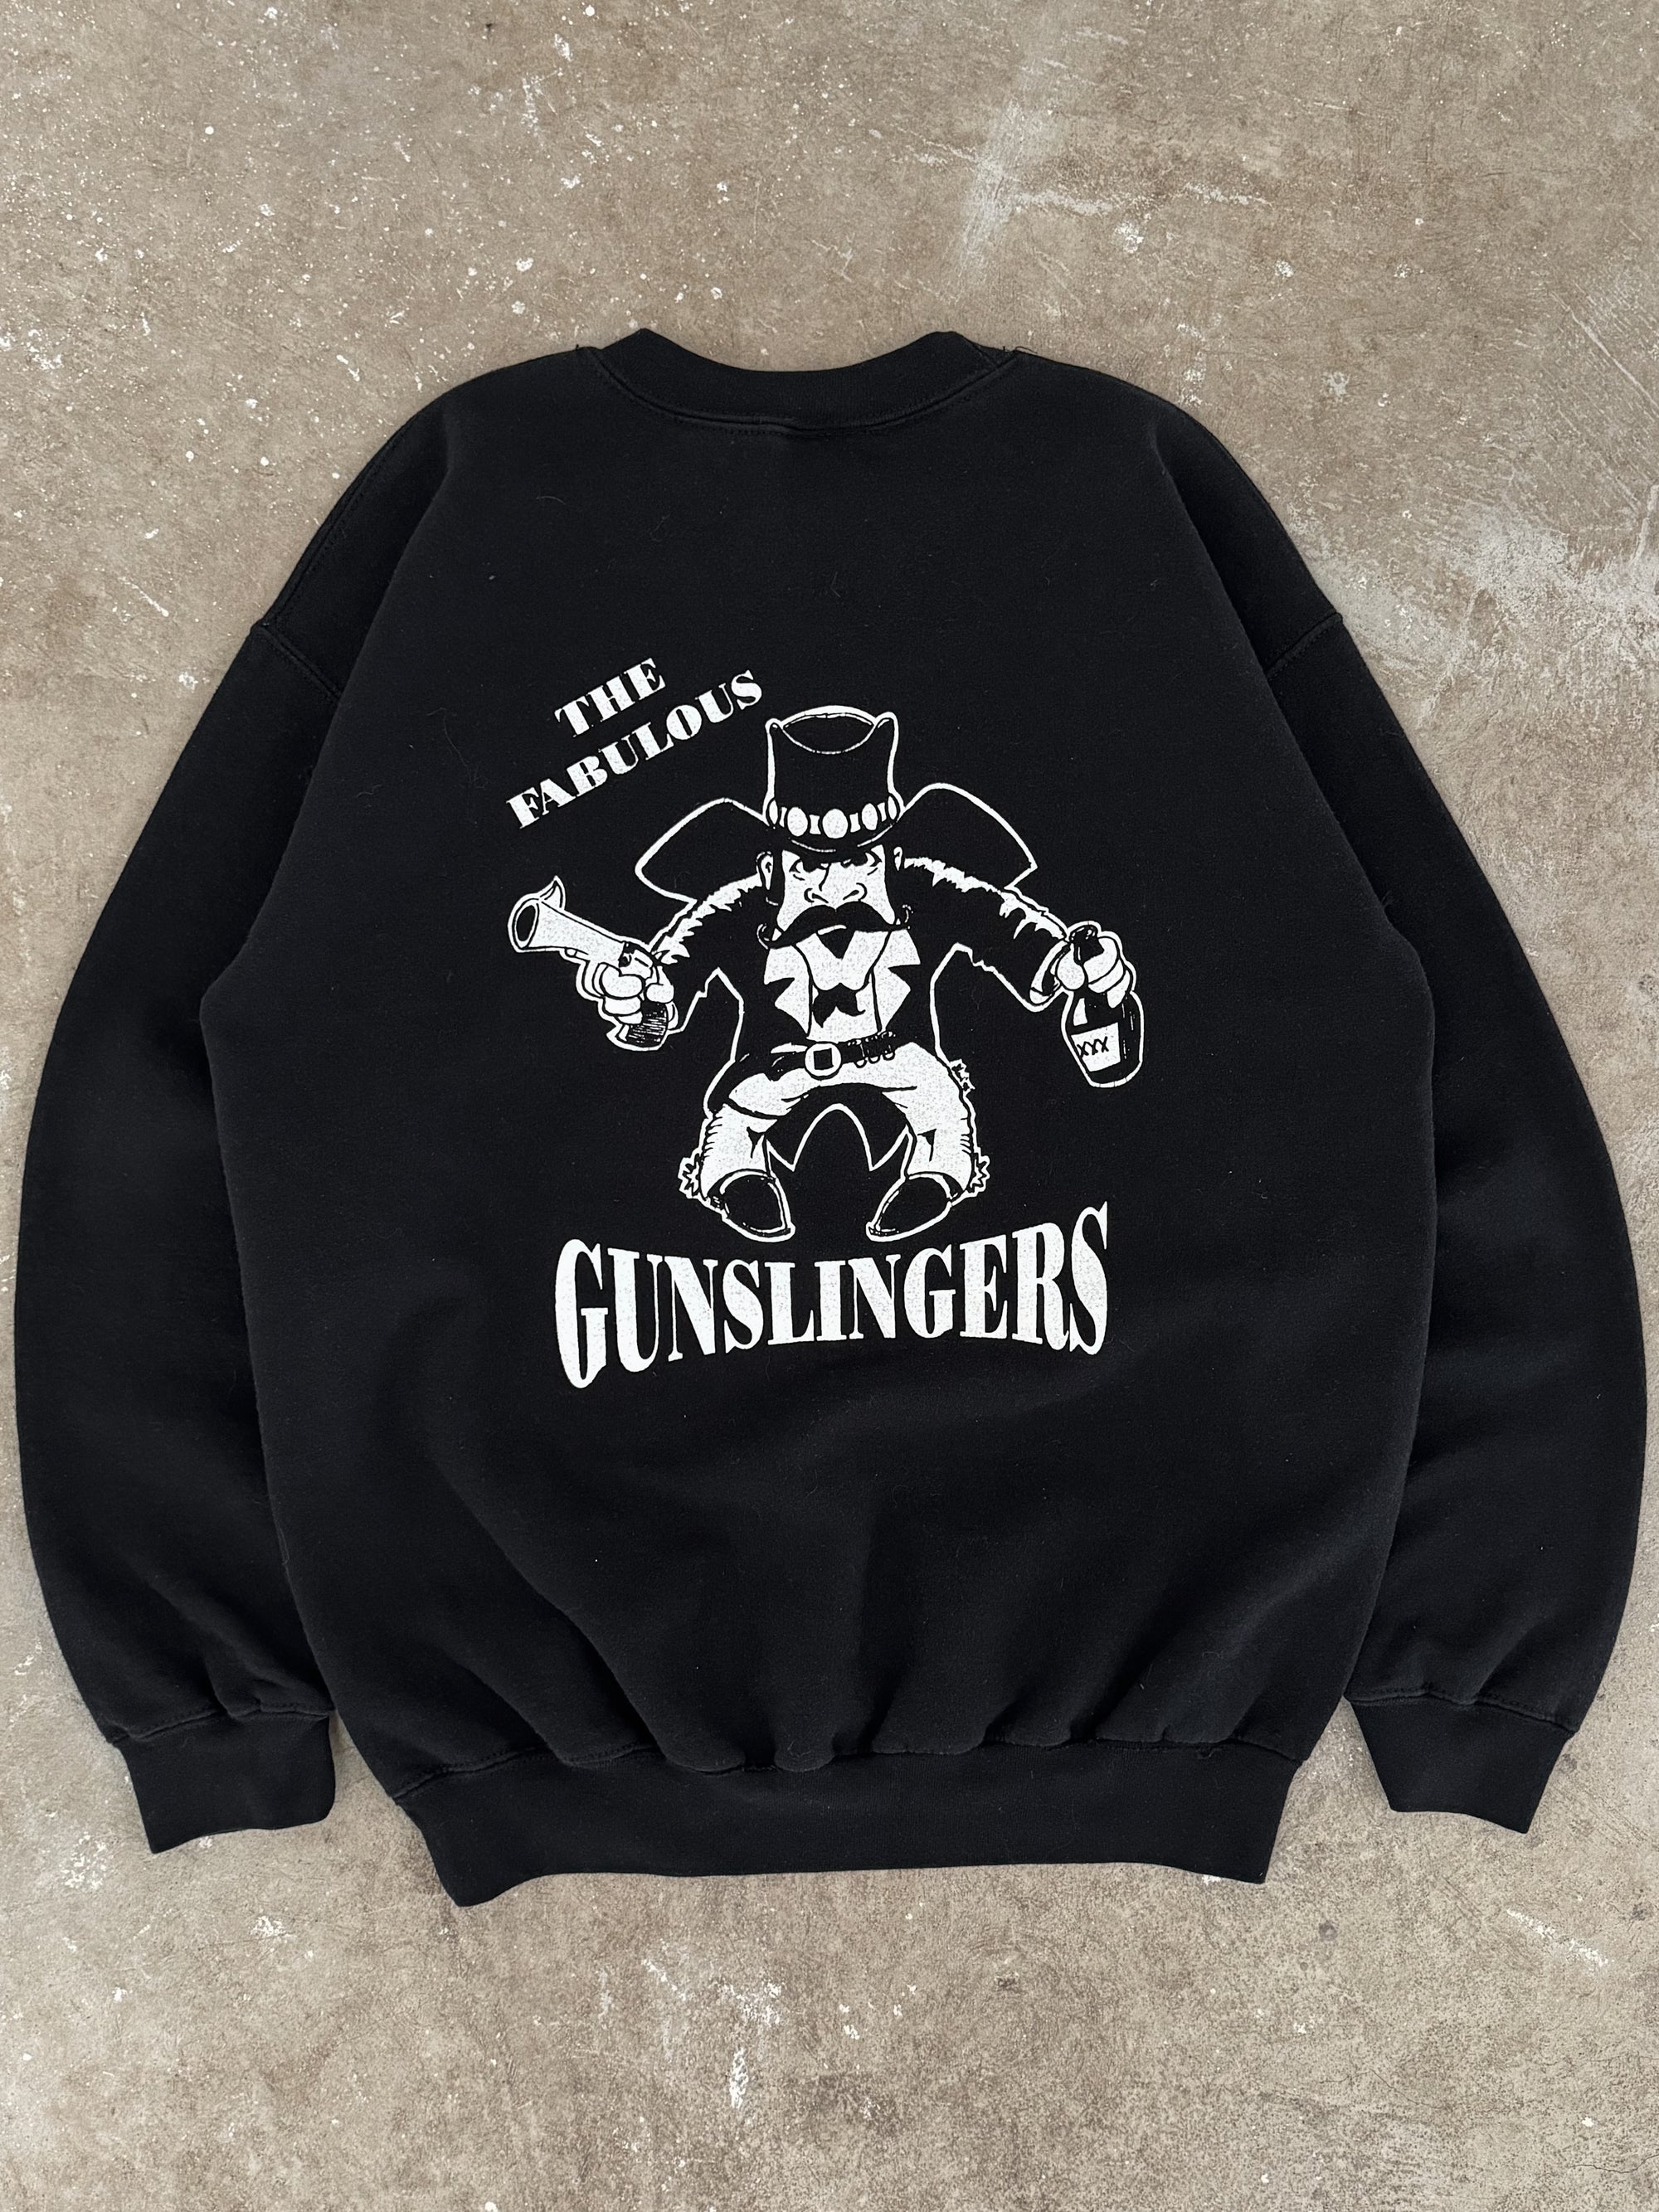 2000s "Gunslingers" Sweatshirt (M)